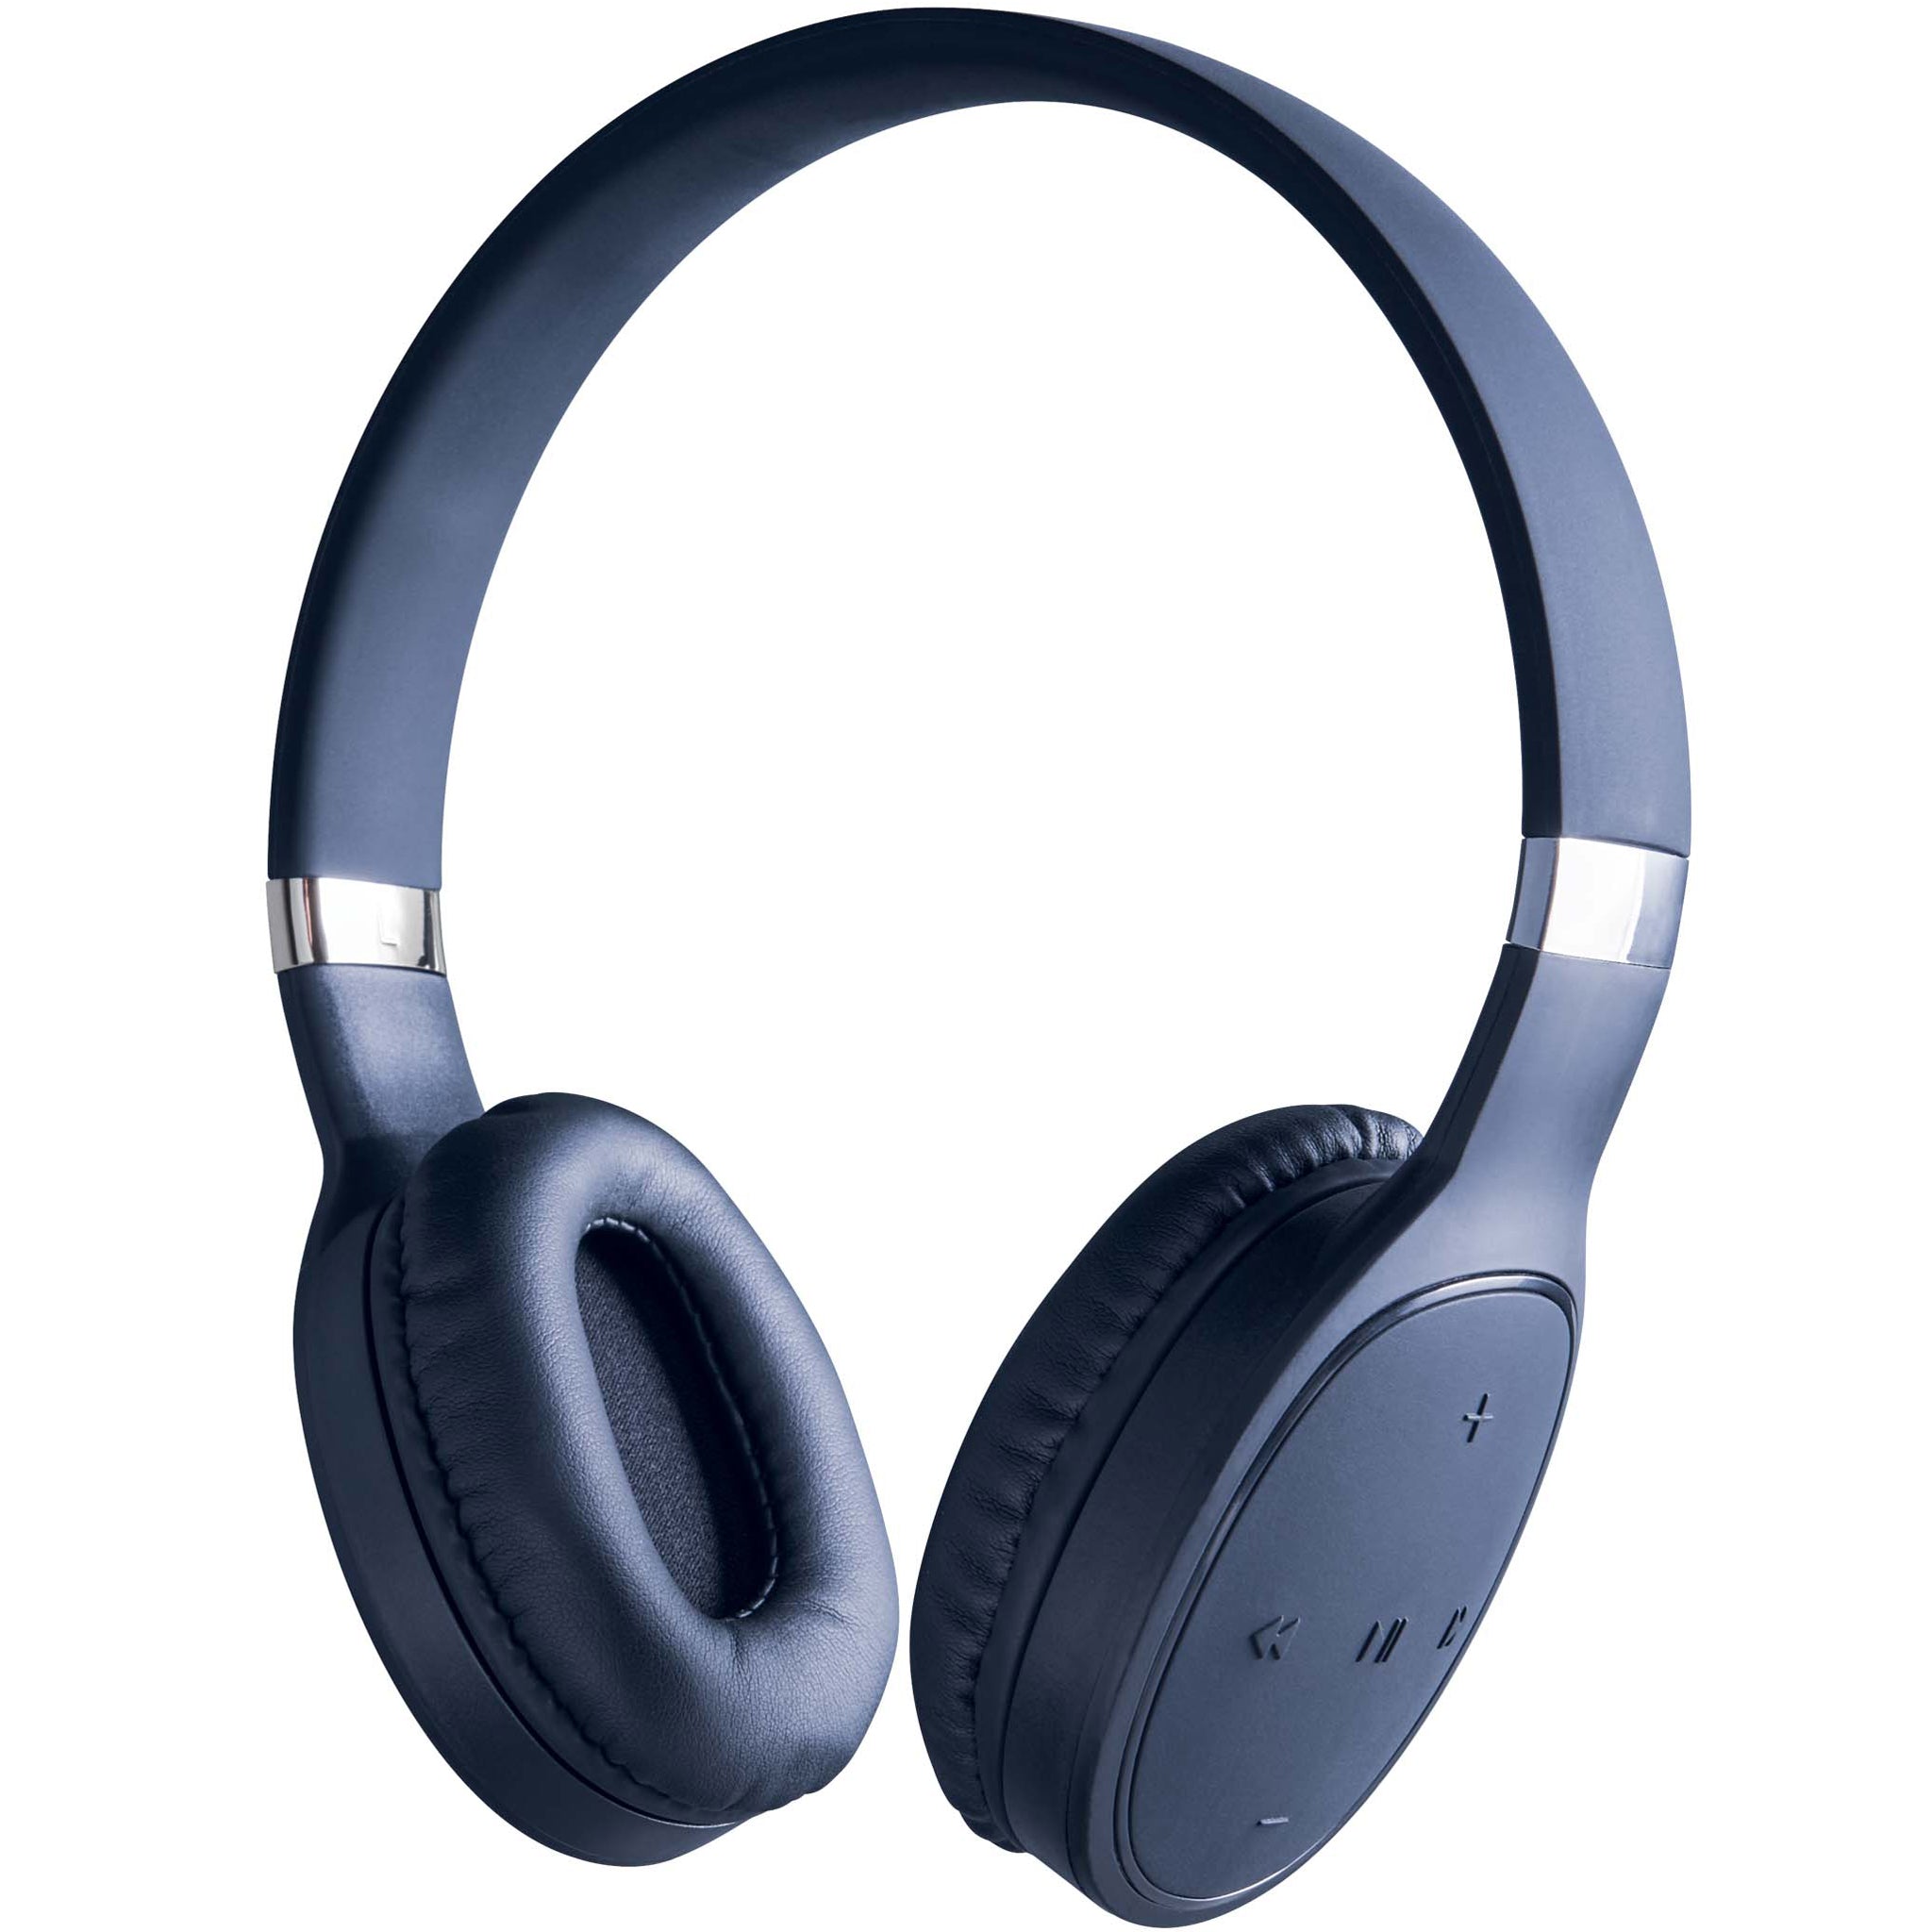 komodos headphones wireless bluetooth